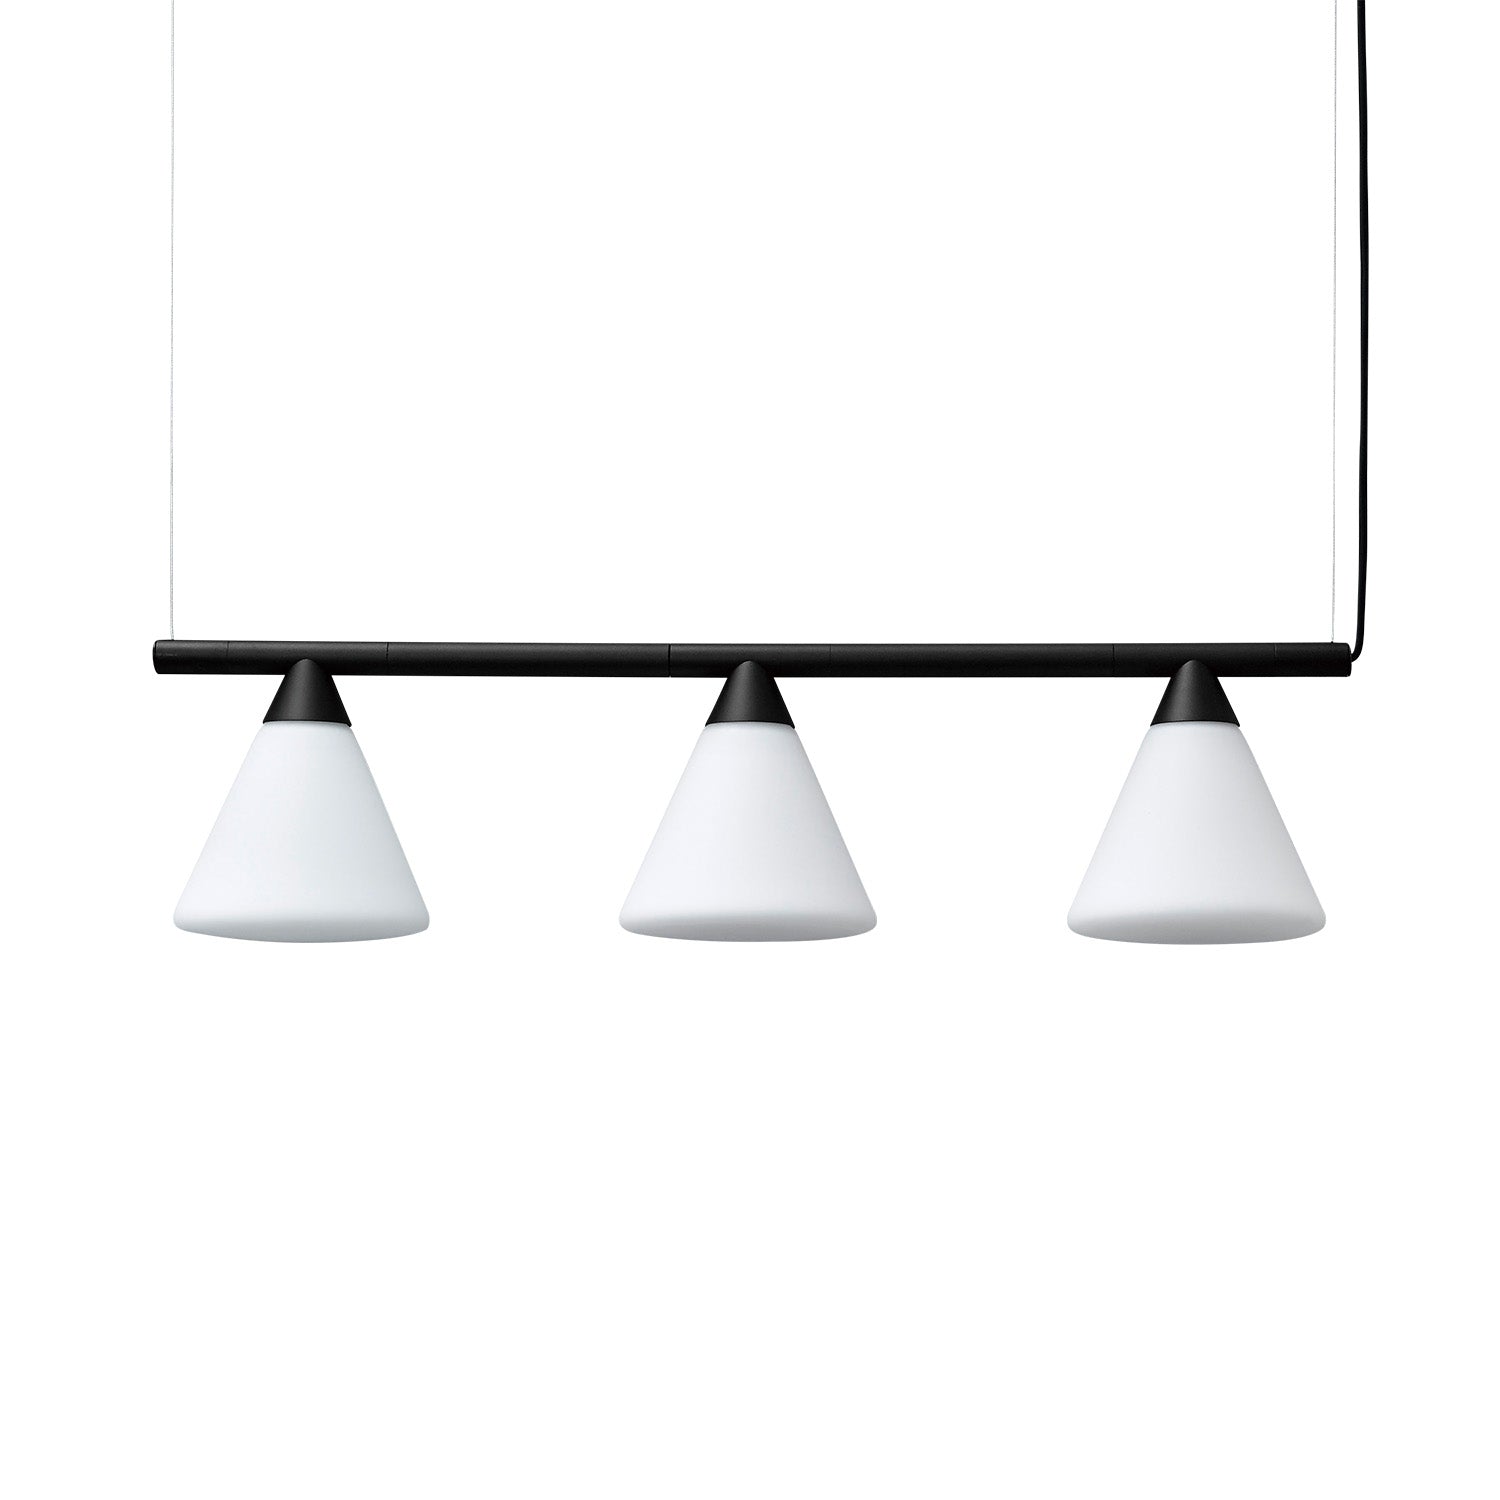 PROBE - Pendant lamp with opaque glass cones